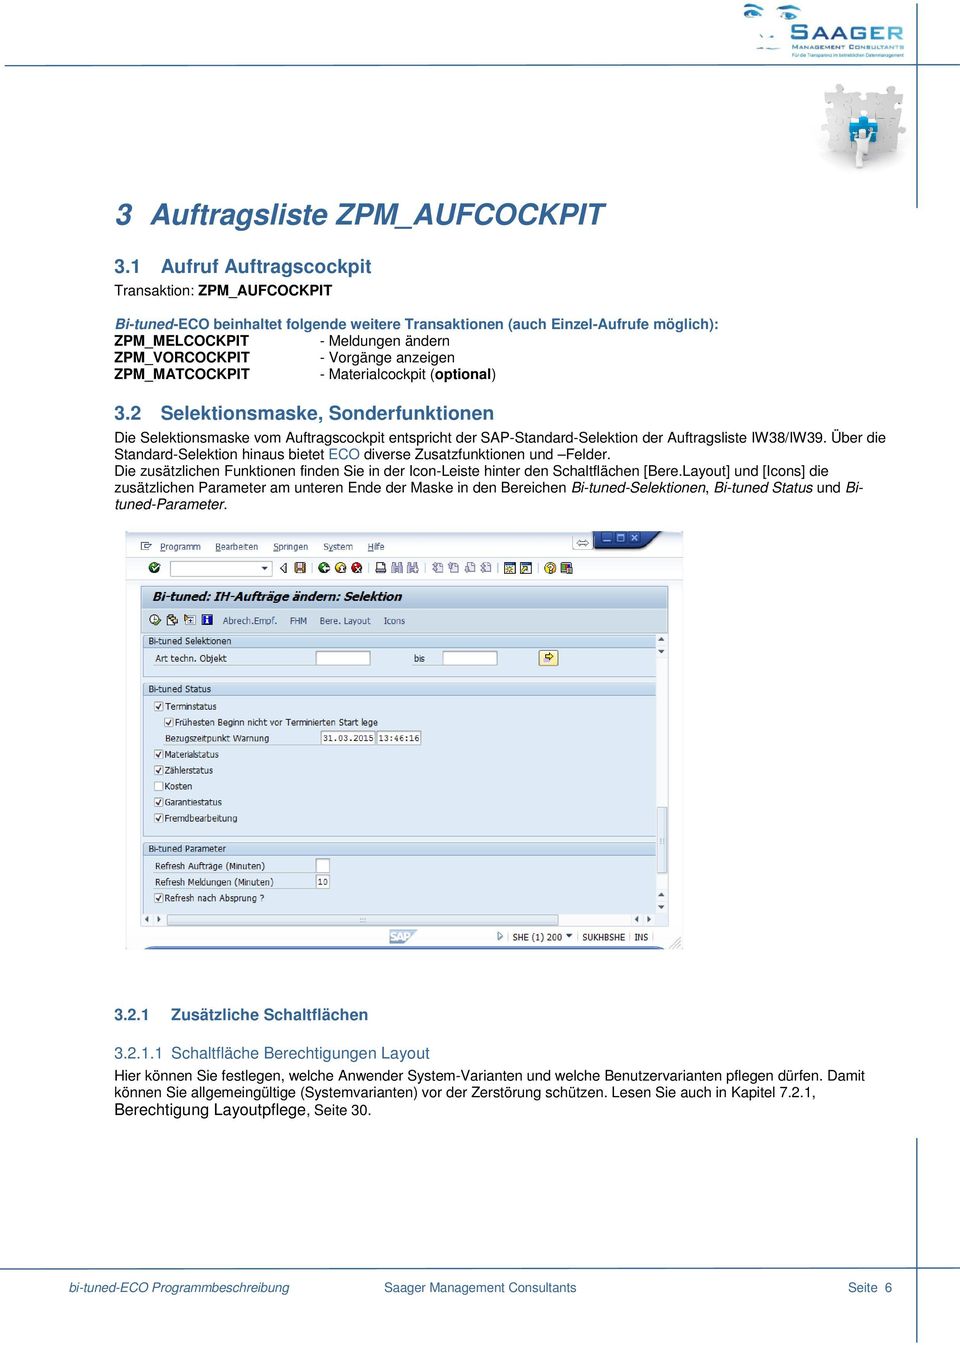 anzeigen ZPM_MATCOCKPIT - Materialcockpit (optional) 3.2 Selektionsmaske, Sonderfunktionen Die Selektionsmaske vom Auftragscockpit entspricht der SAP-Standard-Selektion der Auftragsliste IW38/IW39.